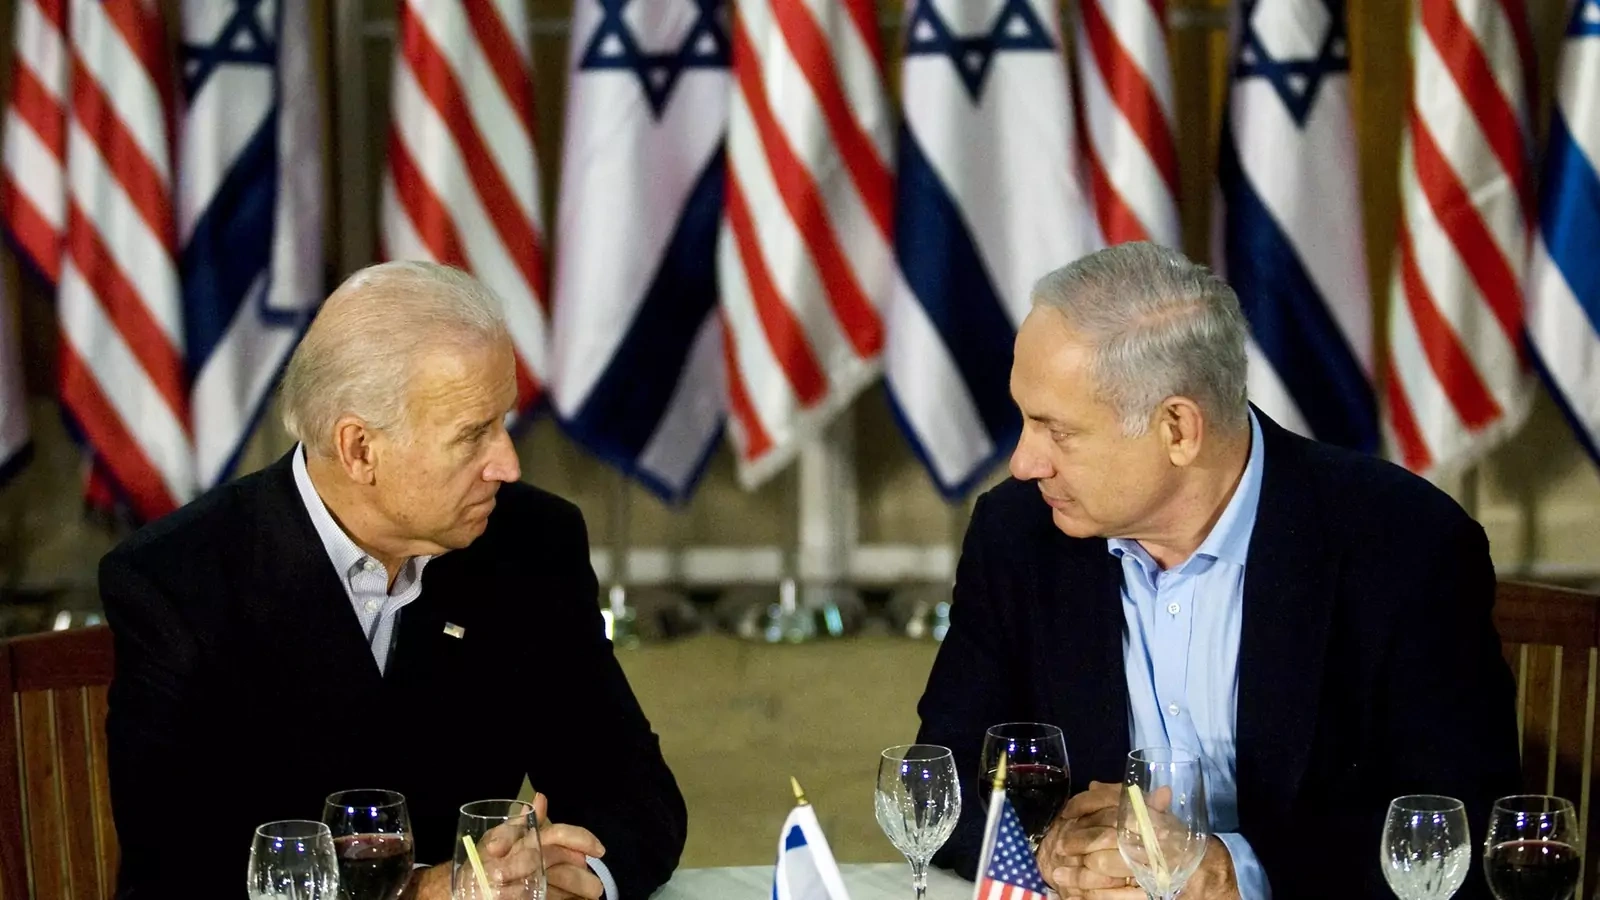 Then-Vice President Joe Biden and Israeli Prime Minister Benjamin Netanyahu in March 2010.